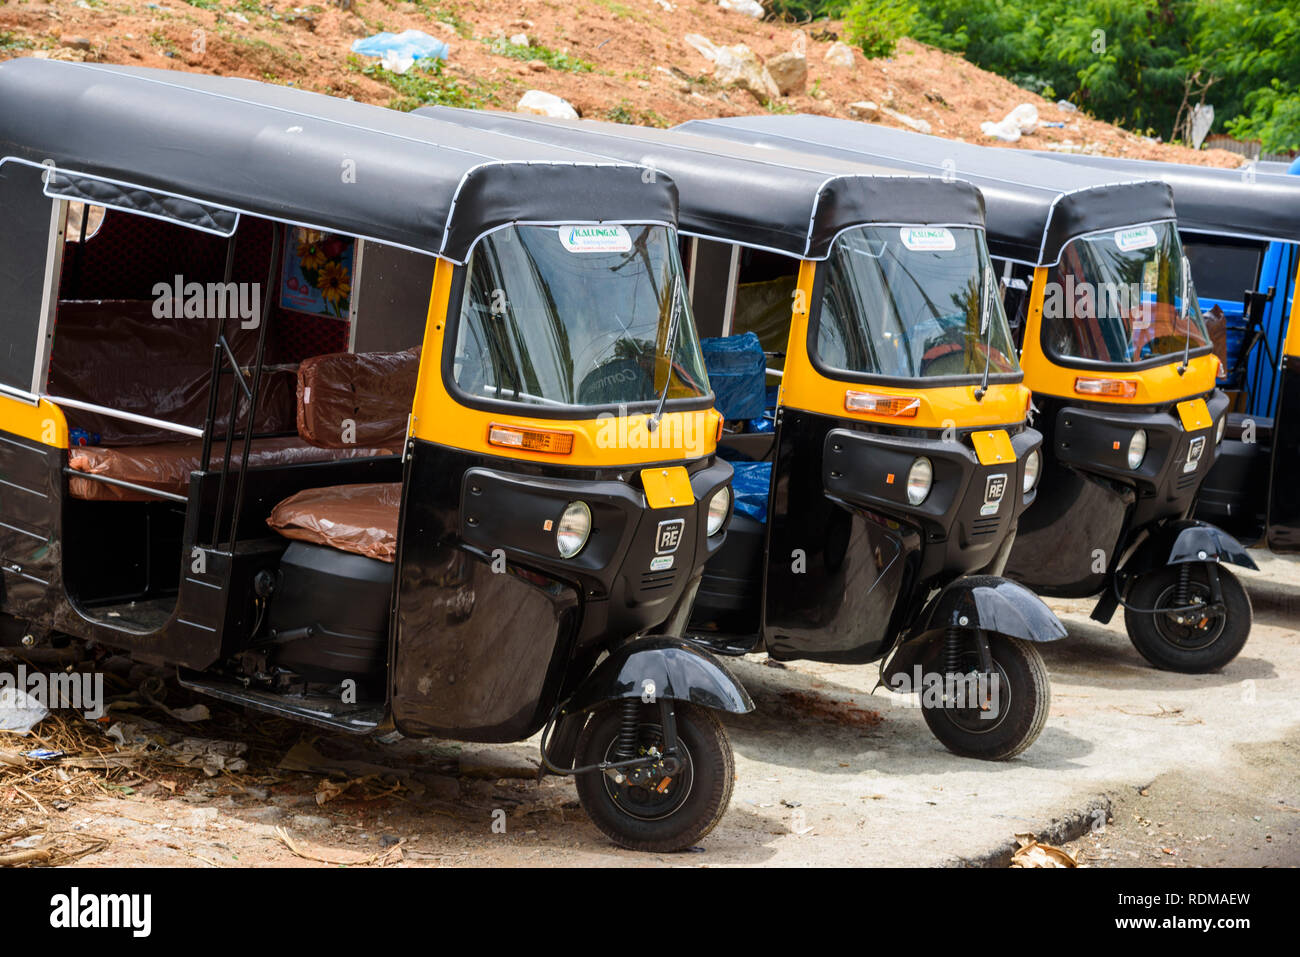 Autos rickshaws (tuk tuks) lined up ready to taxi passengers around Trivandrum, Kerala, India Stock Photo